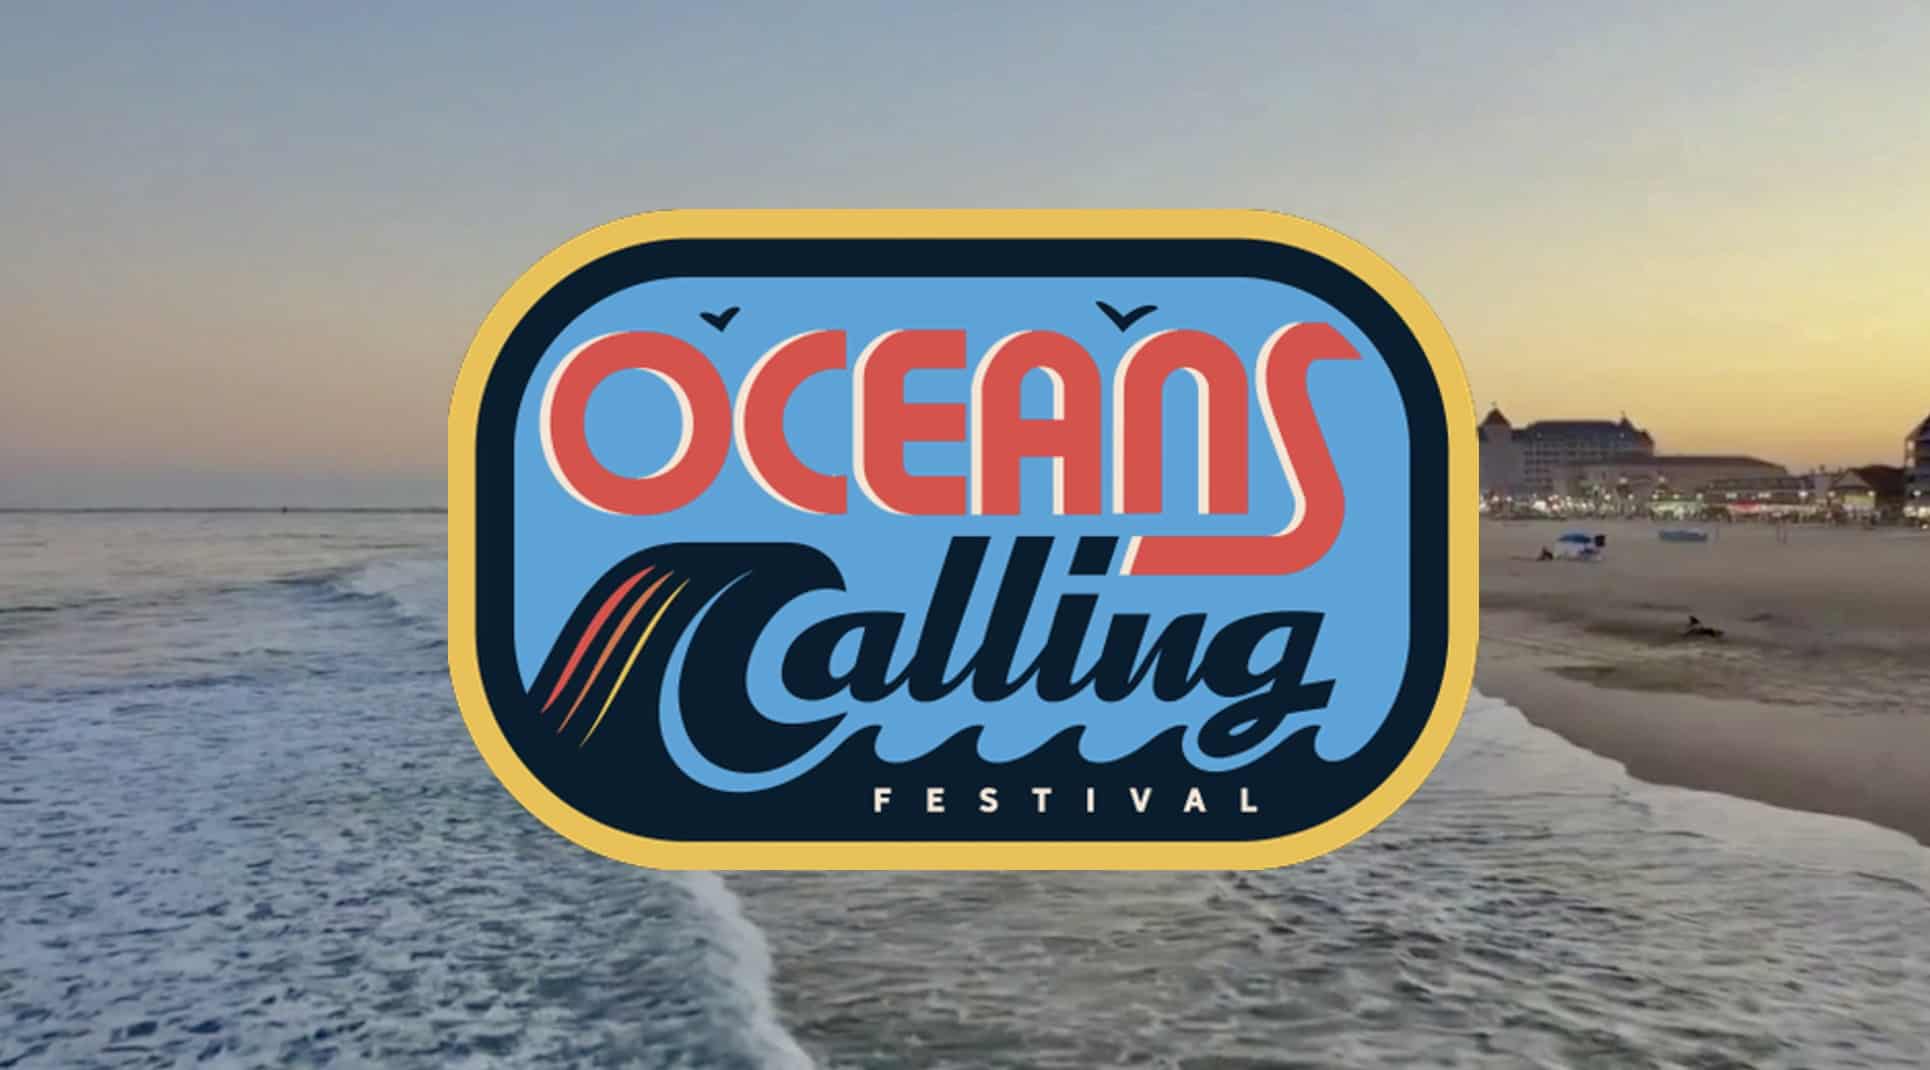 Oceans Calling Music Festival Announces Blockbuster Lineup